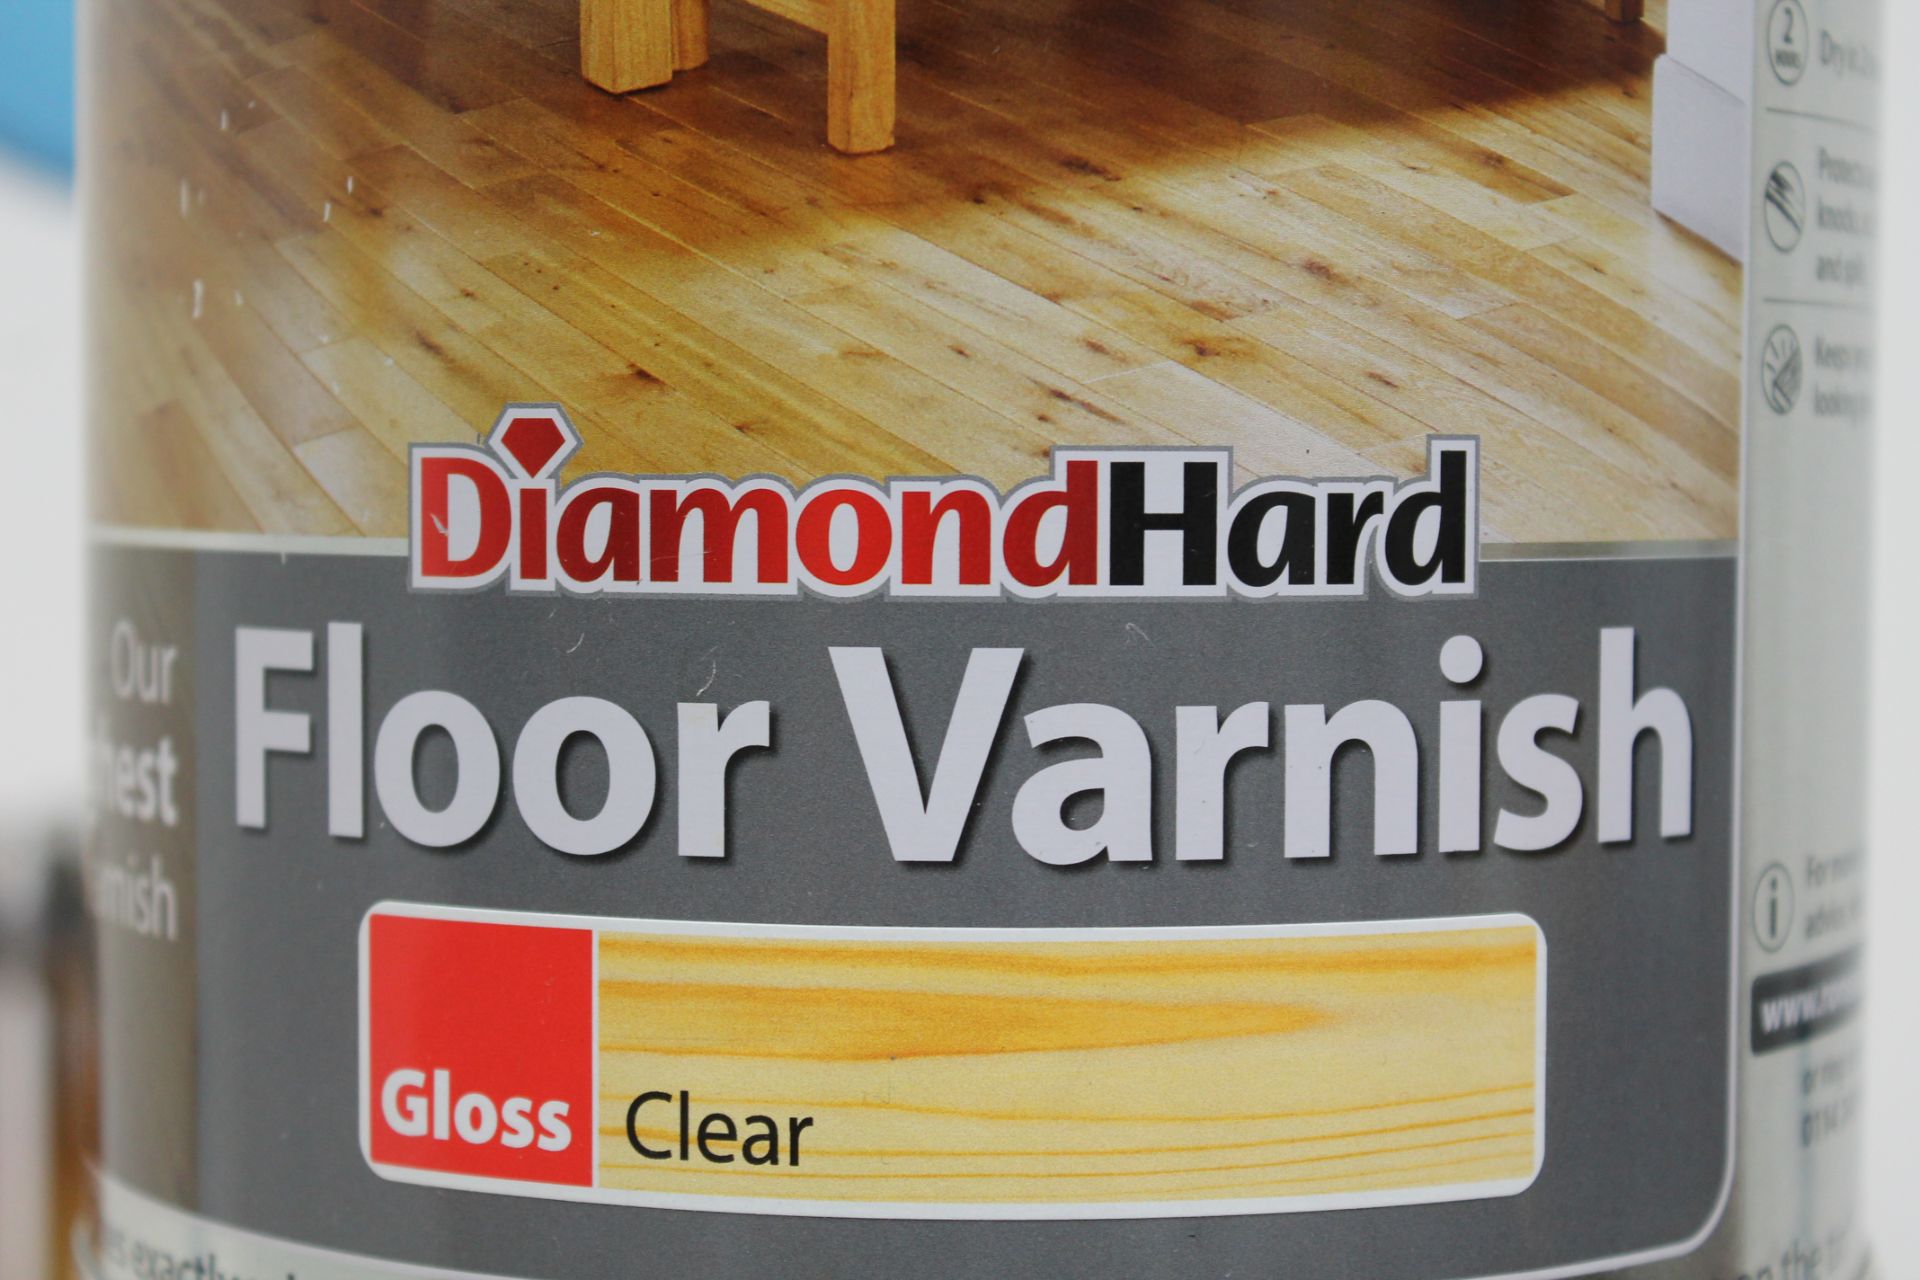 5 x 2.5L Ronseal Diamond Hard Floor Varnish (Gloss Clear) - Image 2 of 2